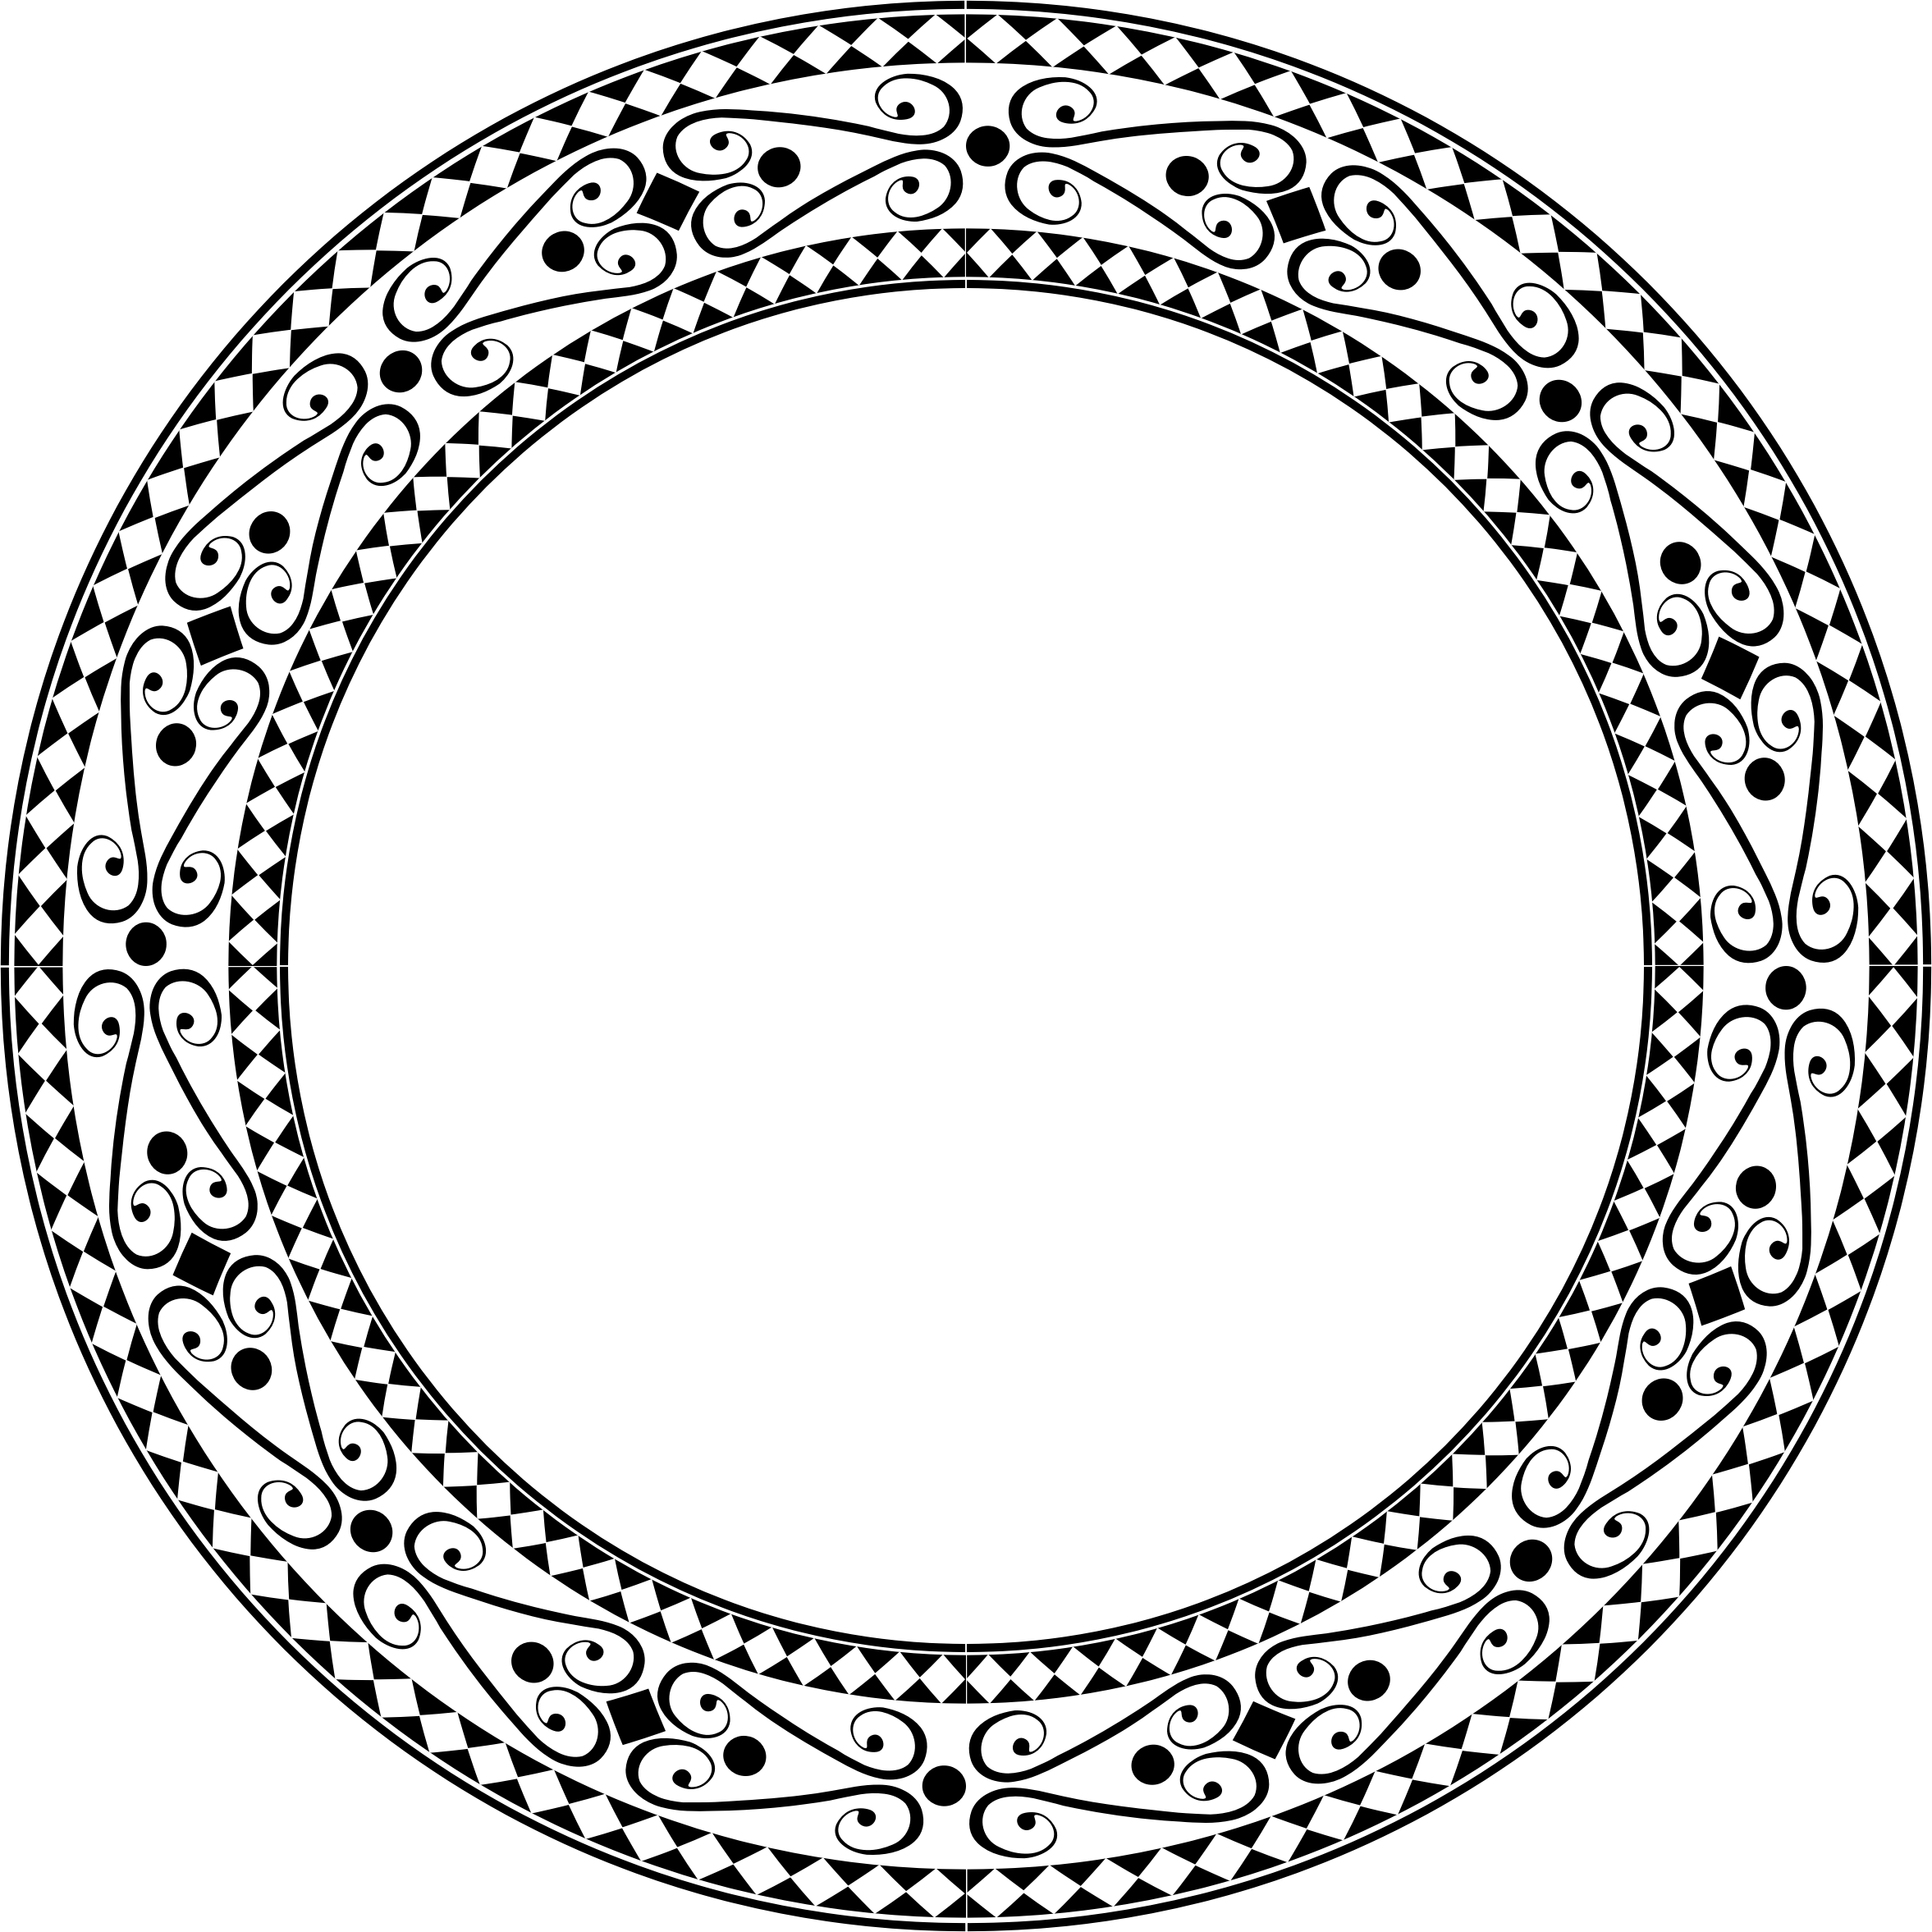 Vector círculo quadro PNG imagem backgroundchakra